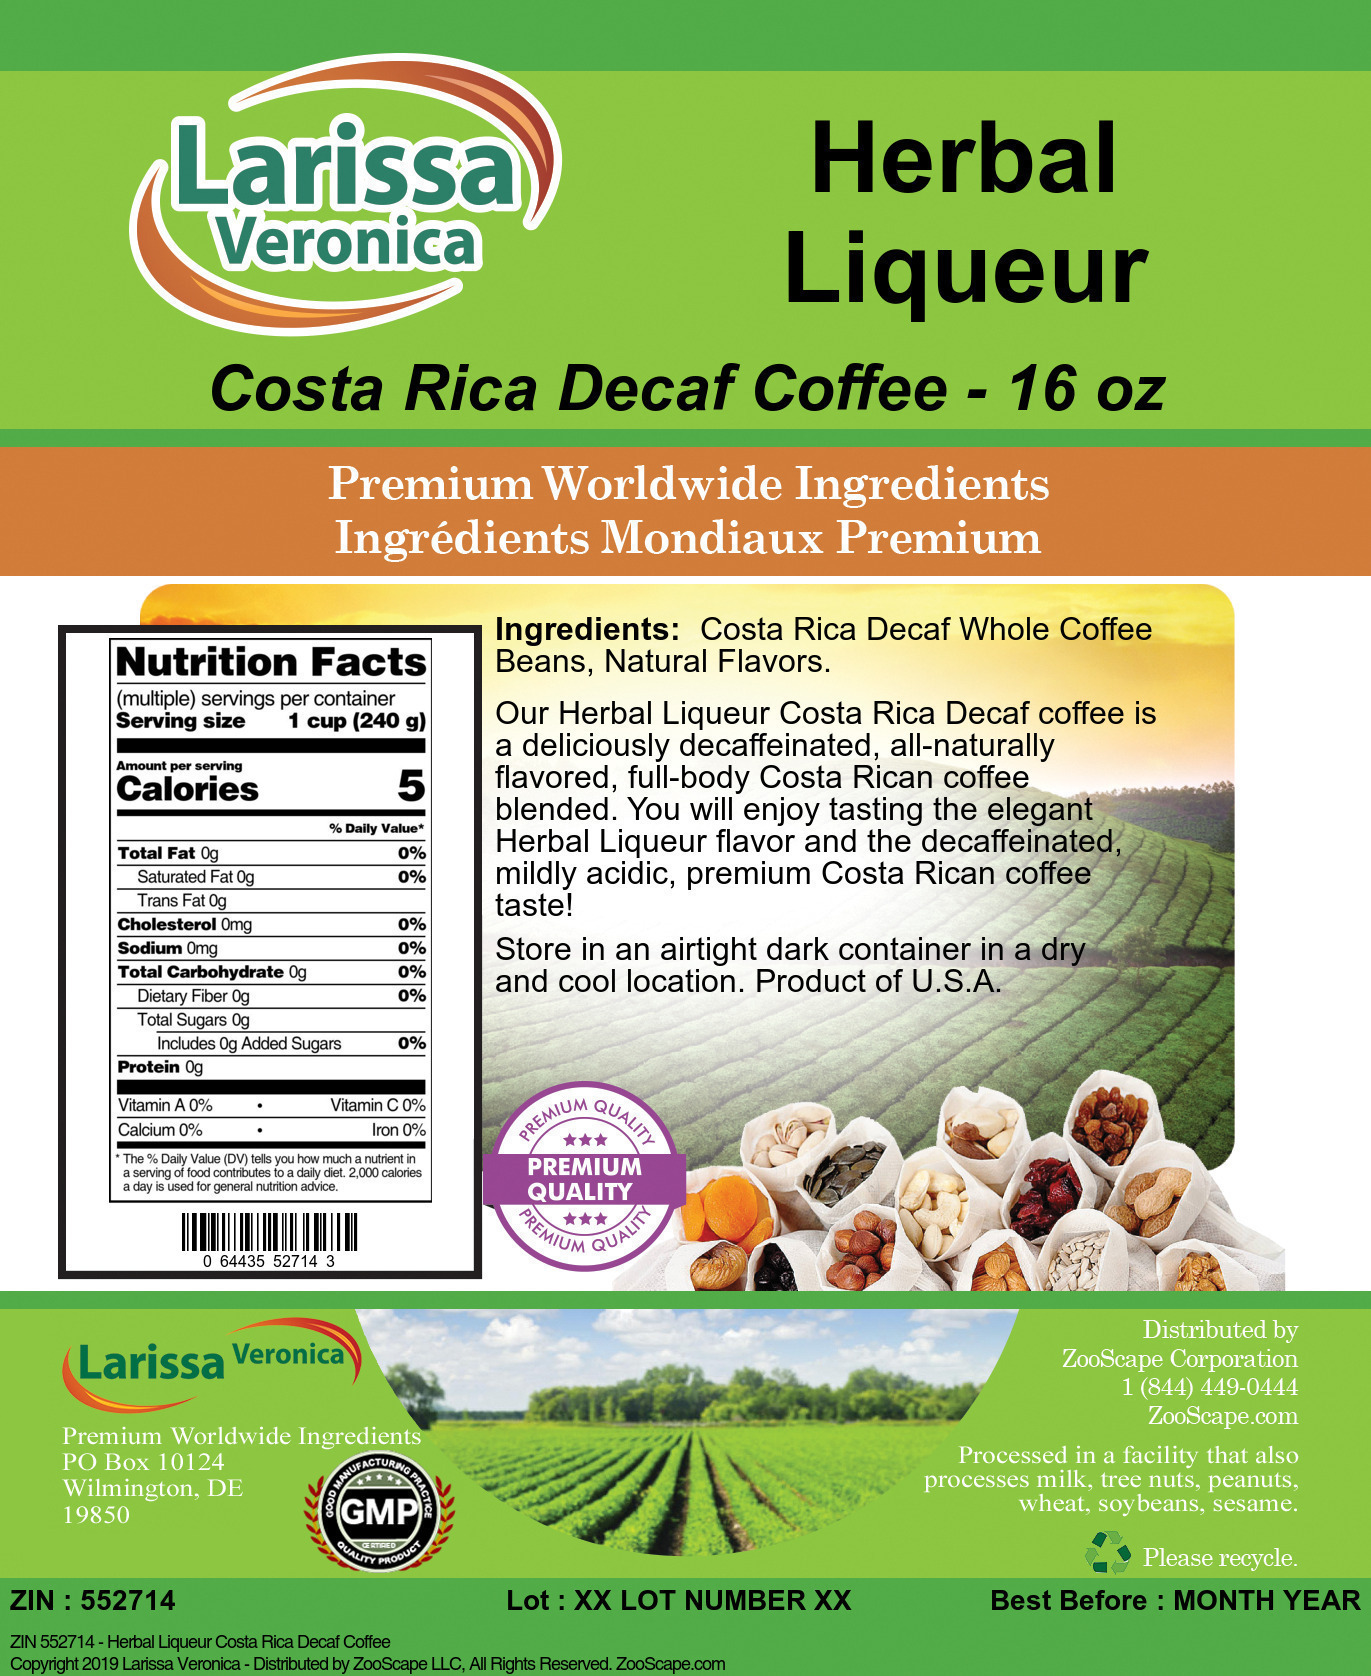 Herbal Liqueur Costa Rica Decaf Coffee - Label